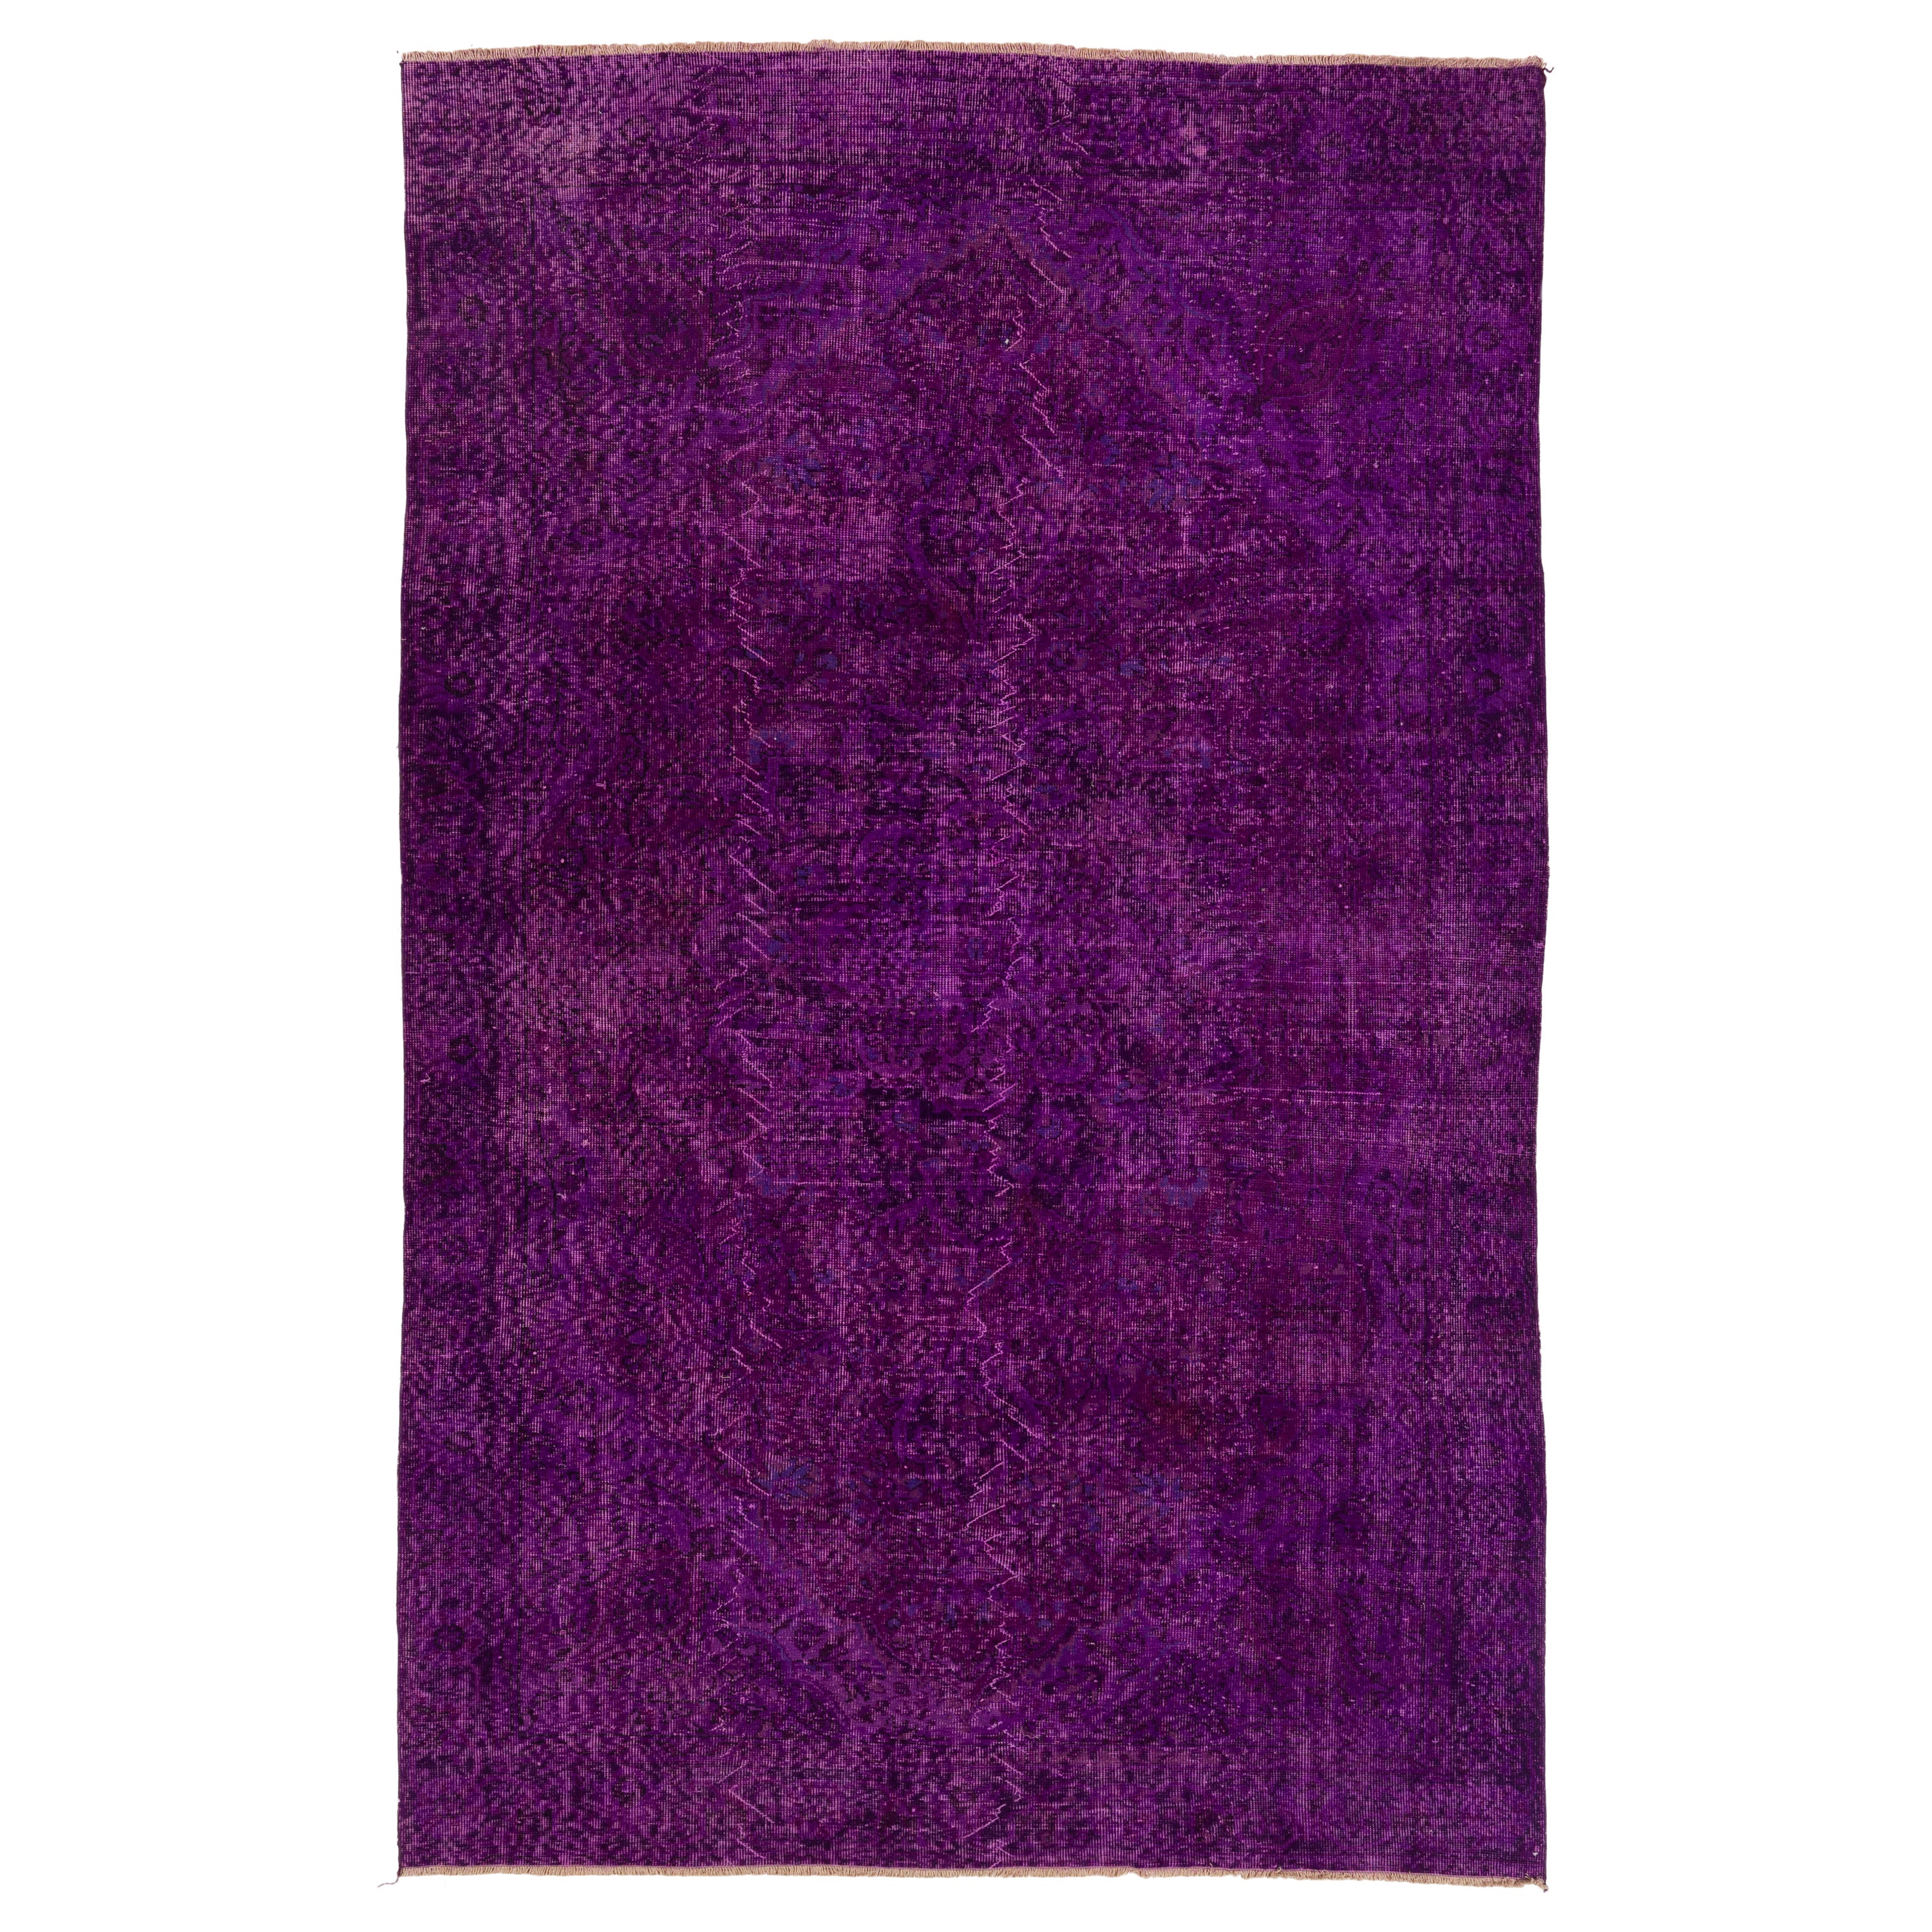 6.4x10.3 Ft Purple Handmade Turkish Area Rug, Contemporary Living Room Carpet